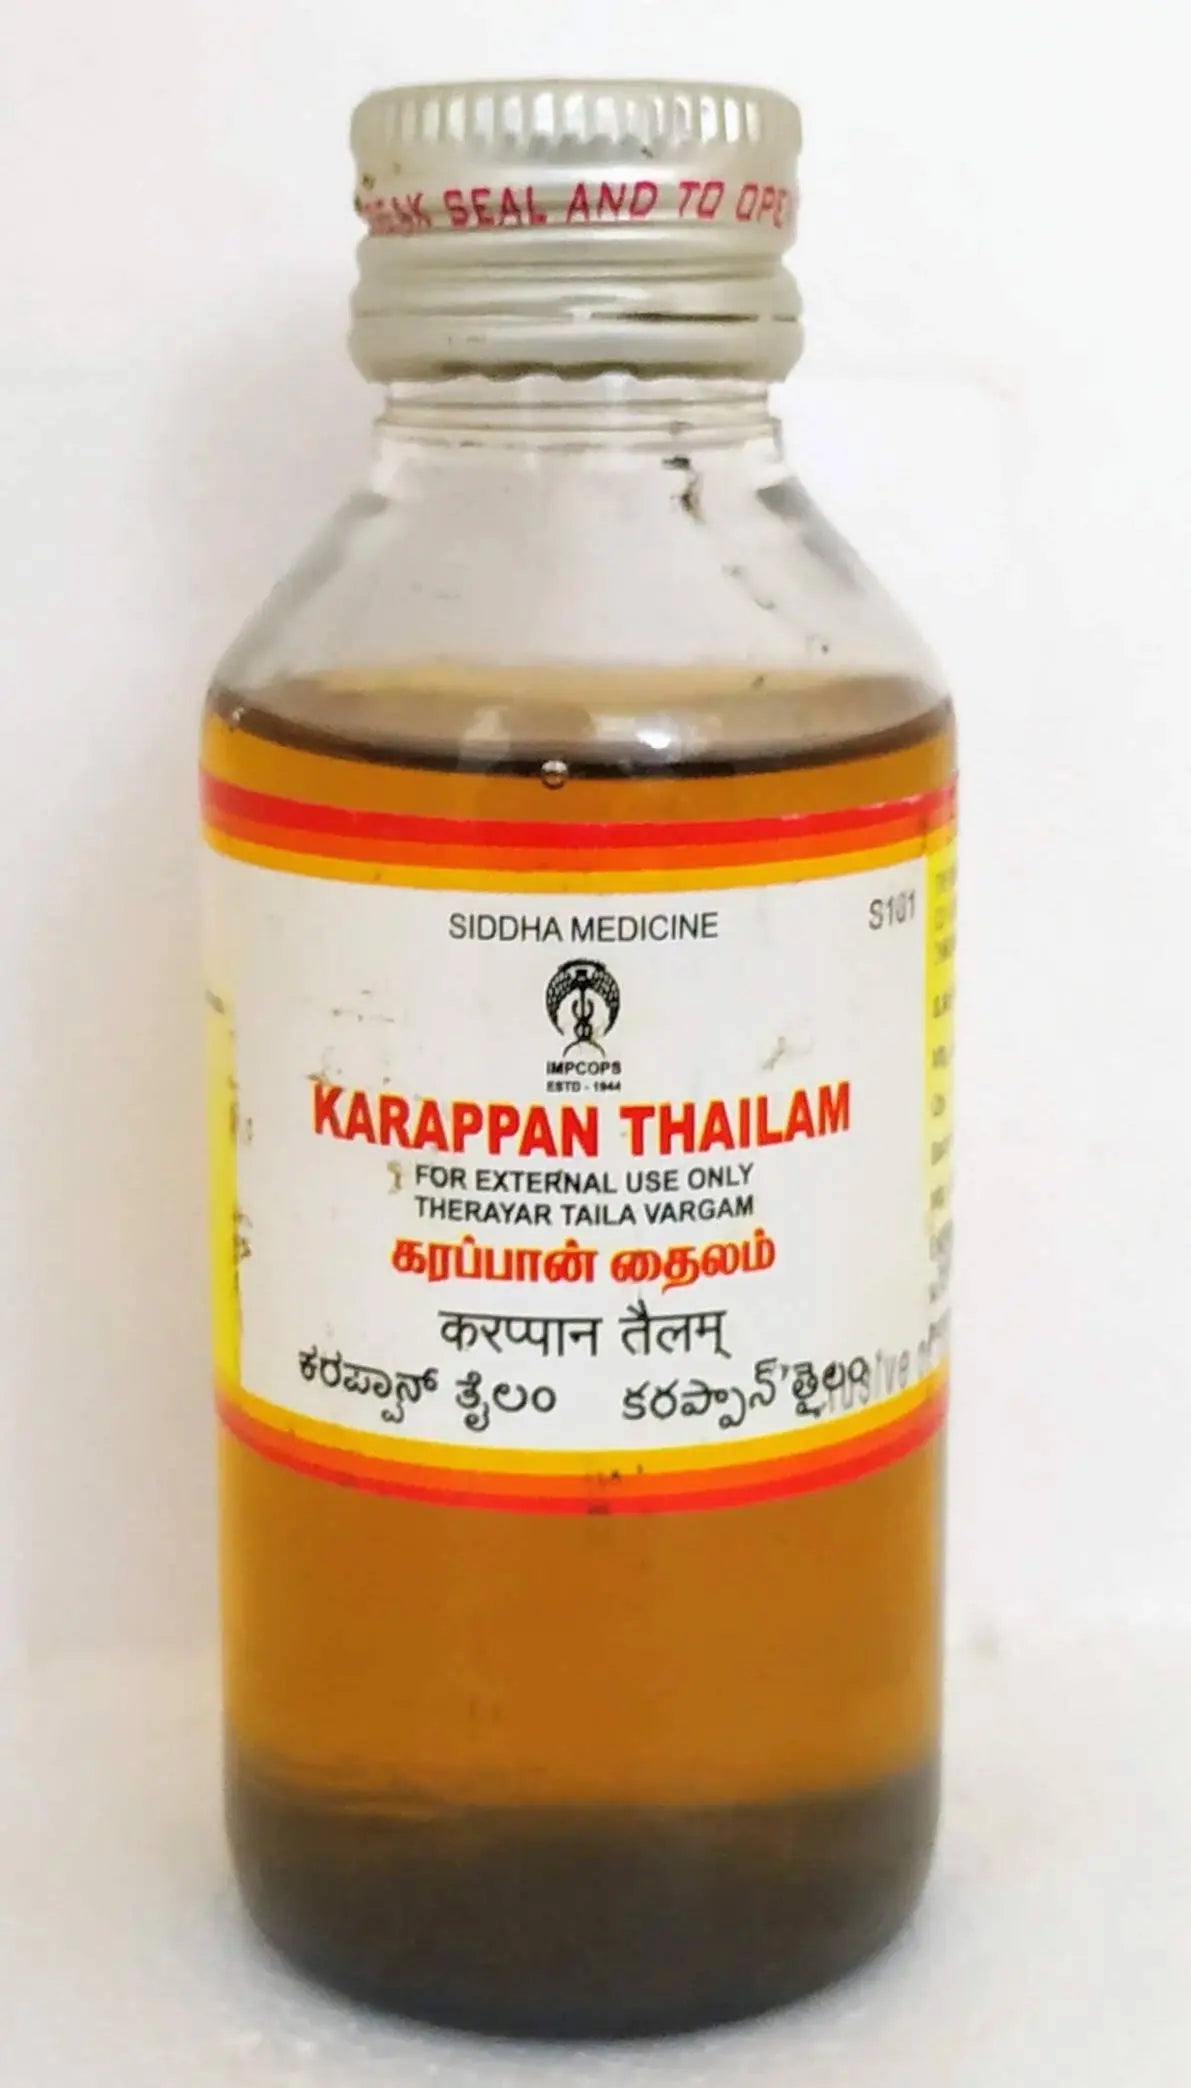 Karappan Thailam 100ml Impcops